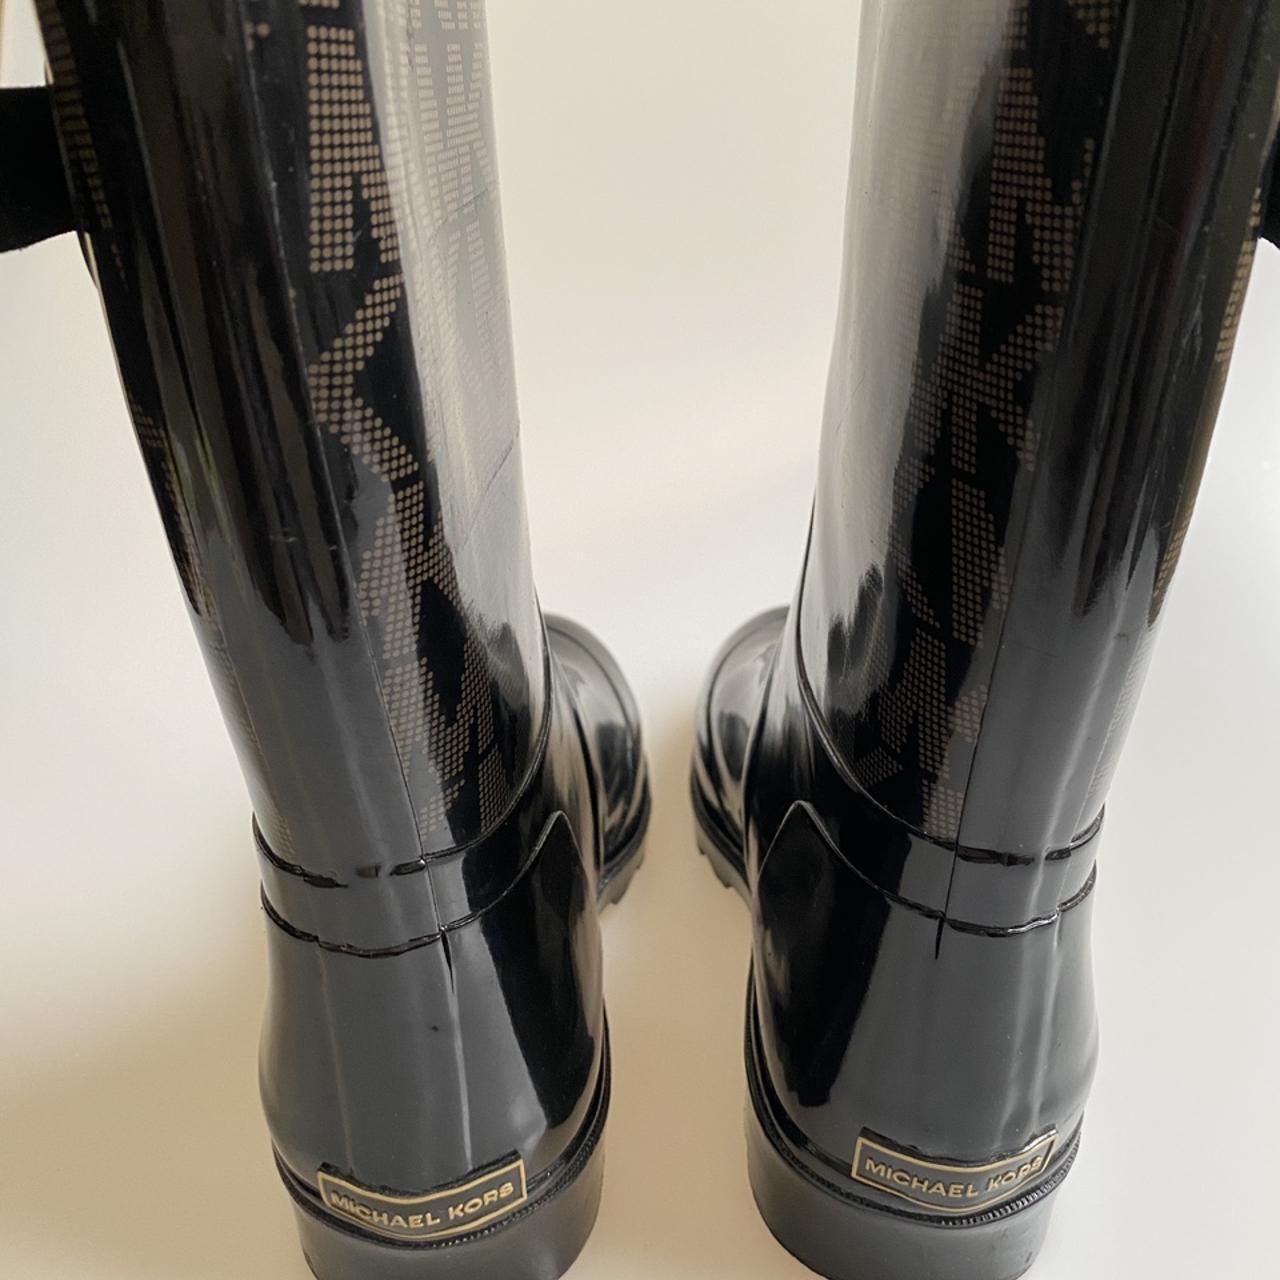 Product Image 2 - Michael KORS Rainboots, Size 7,